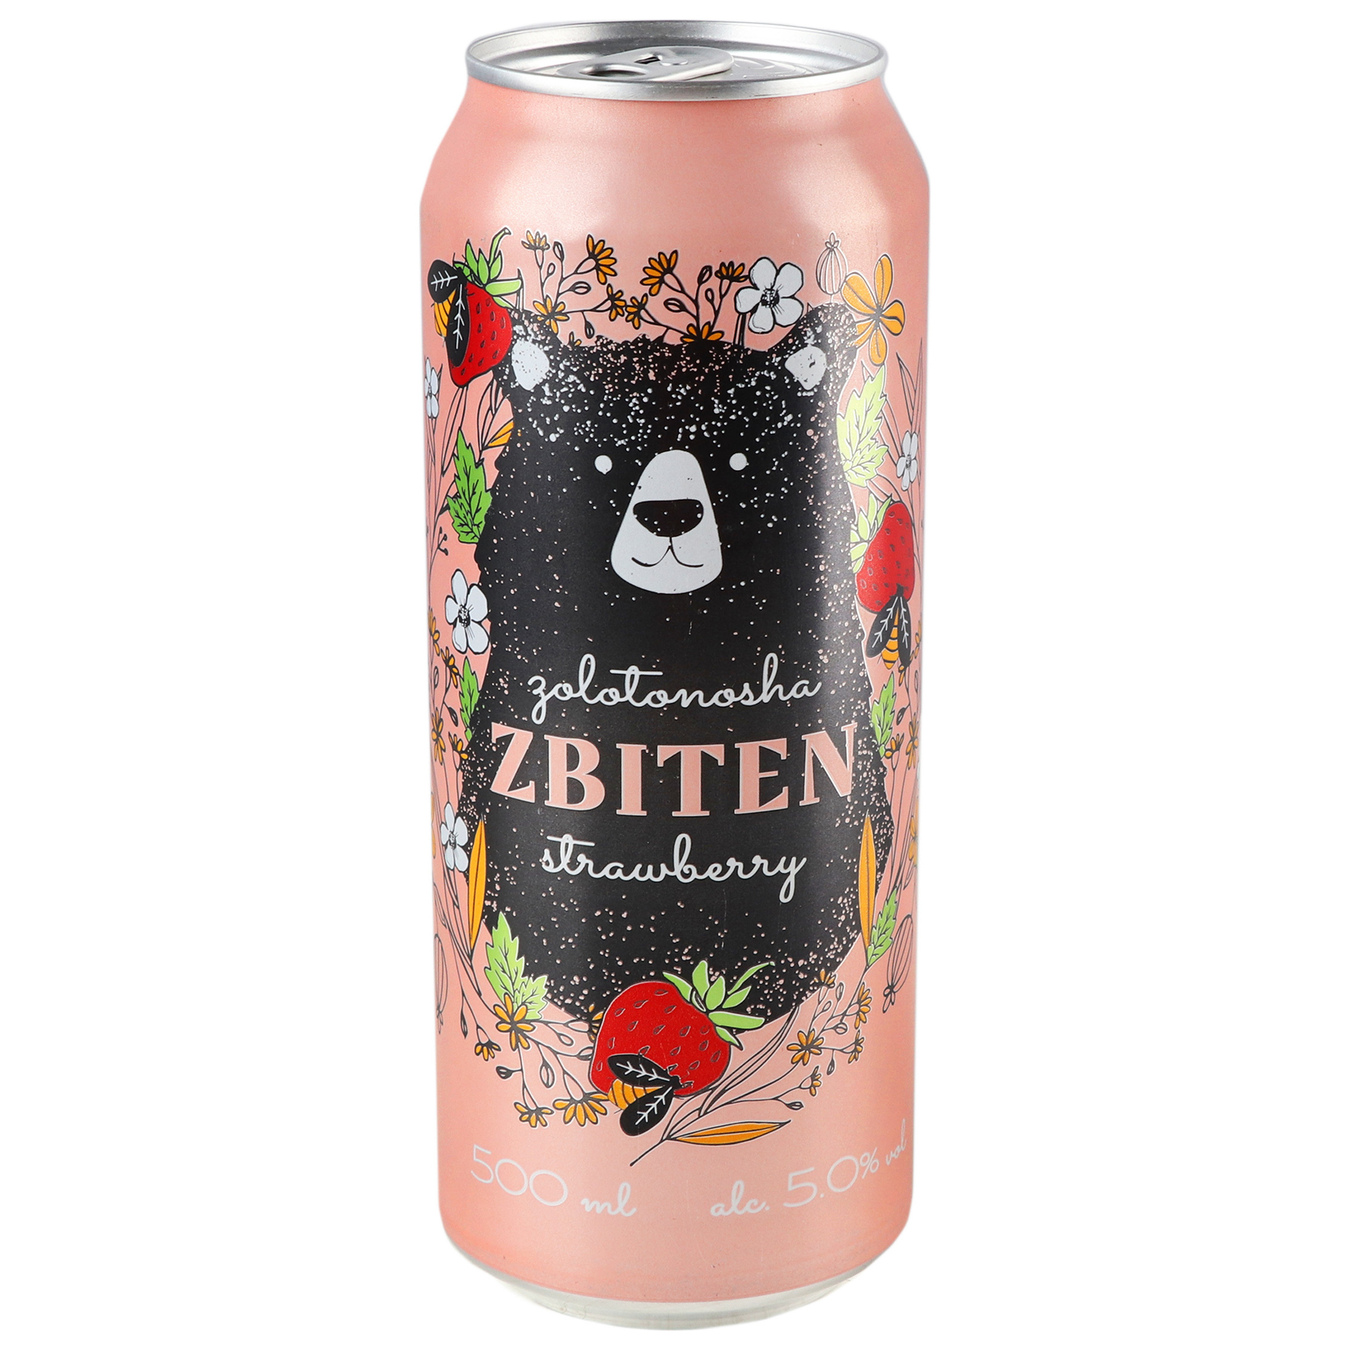 Fermented drink Zbiten Zolotonisky Apple, Strawberry 5% 0.5l iron can 4